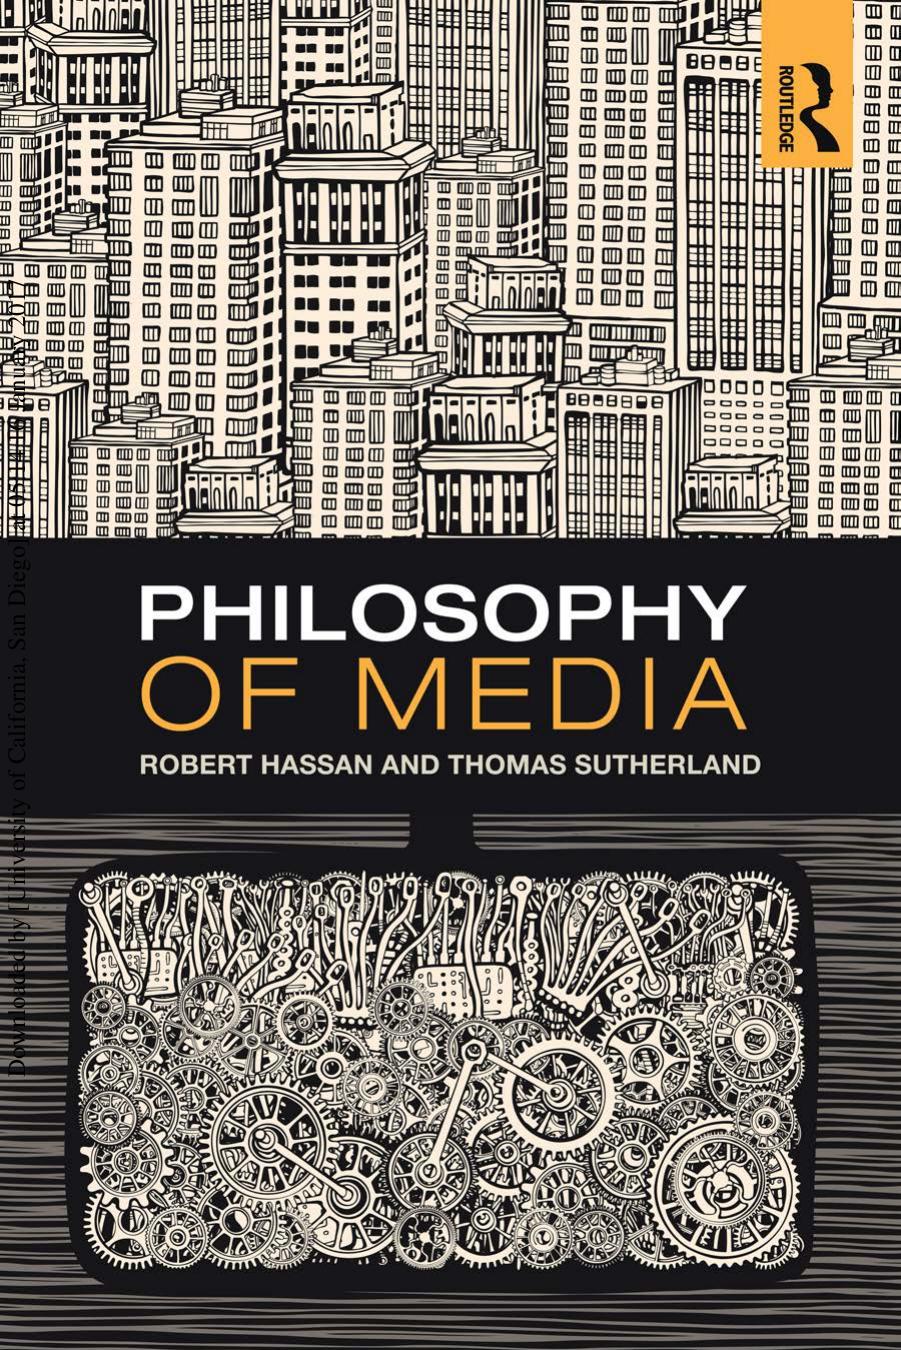 Philosophy of Media 2017.pdf